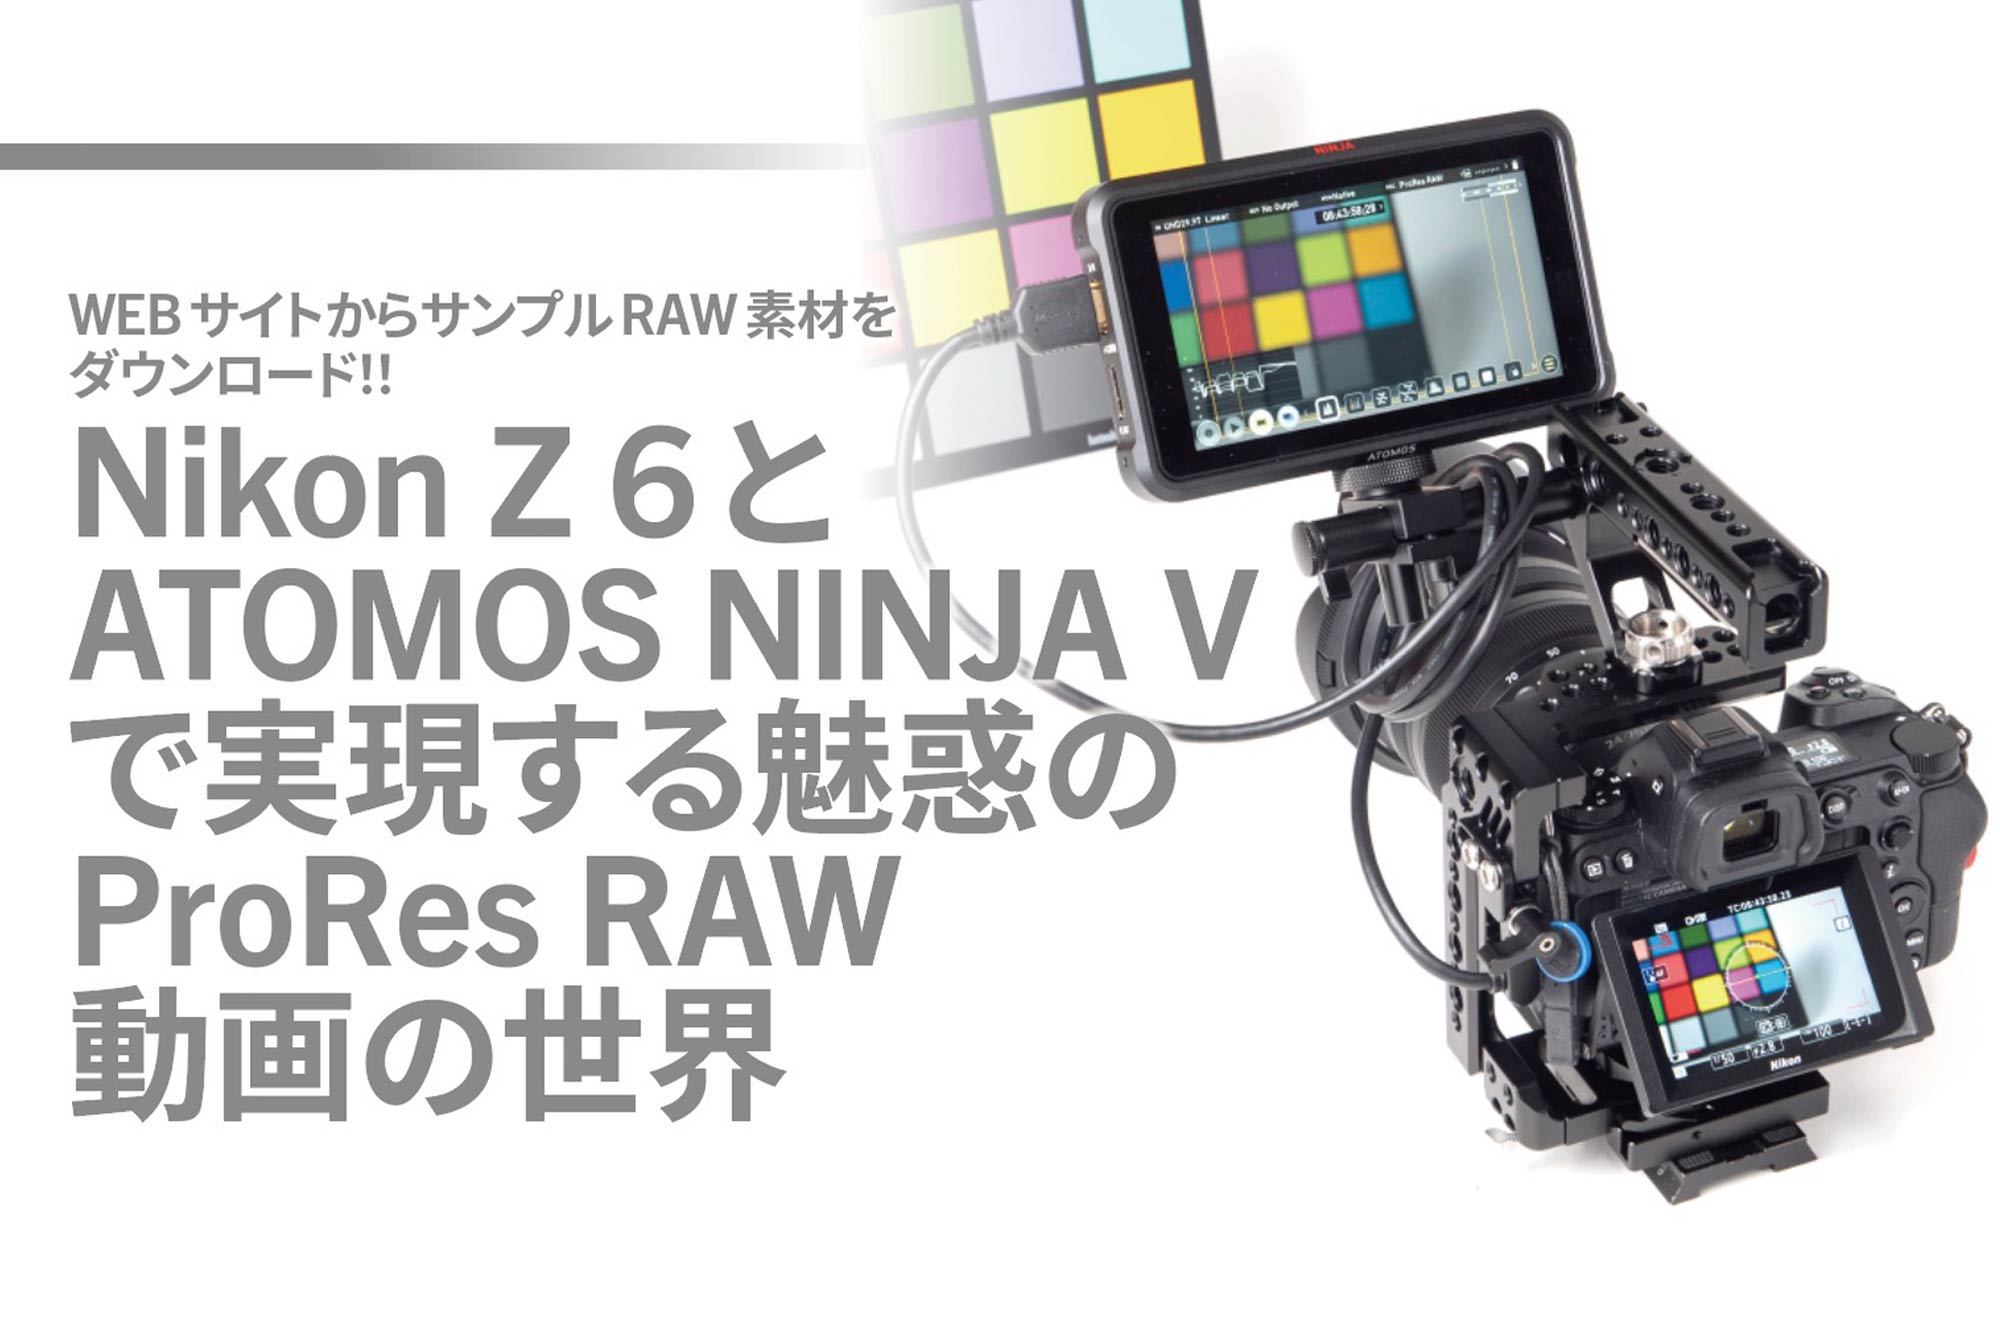 Nikon Z 6と Atomos Ninja V で実現する魅惑の Prores Raw 動画の世界 オリジナルraw素材をダウンロード可能 Video Salon